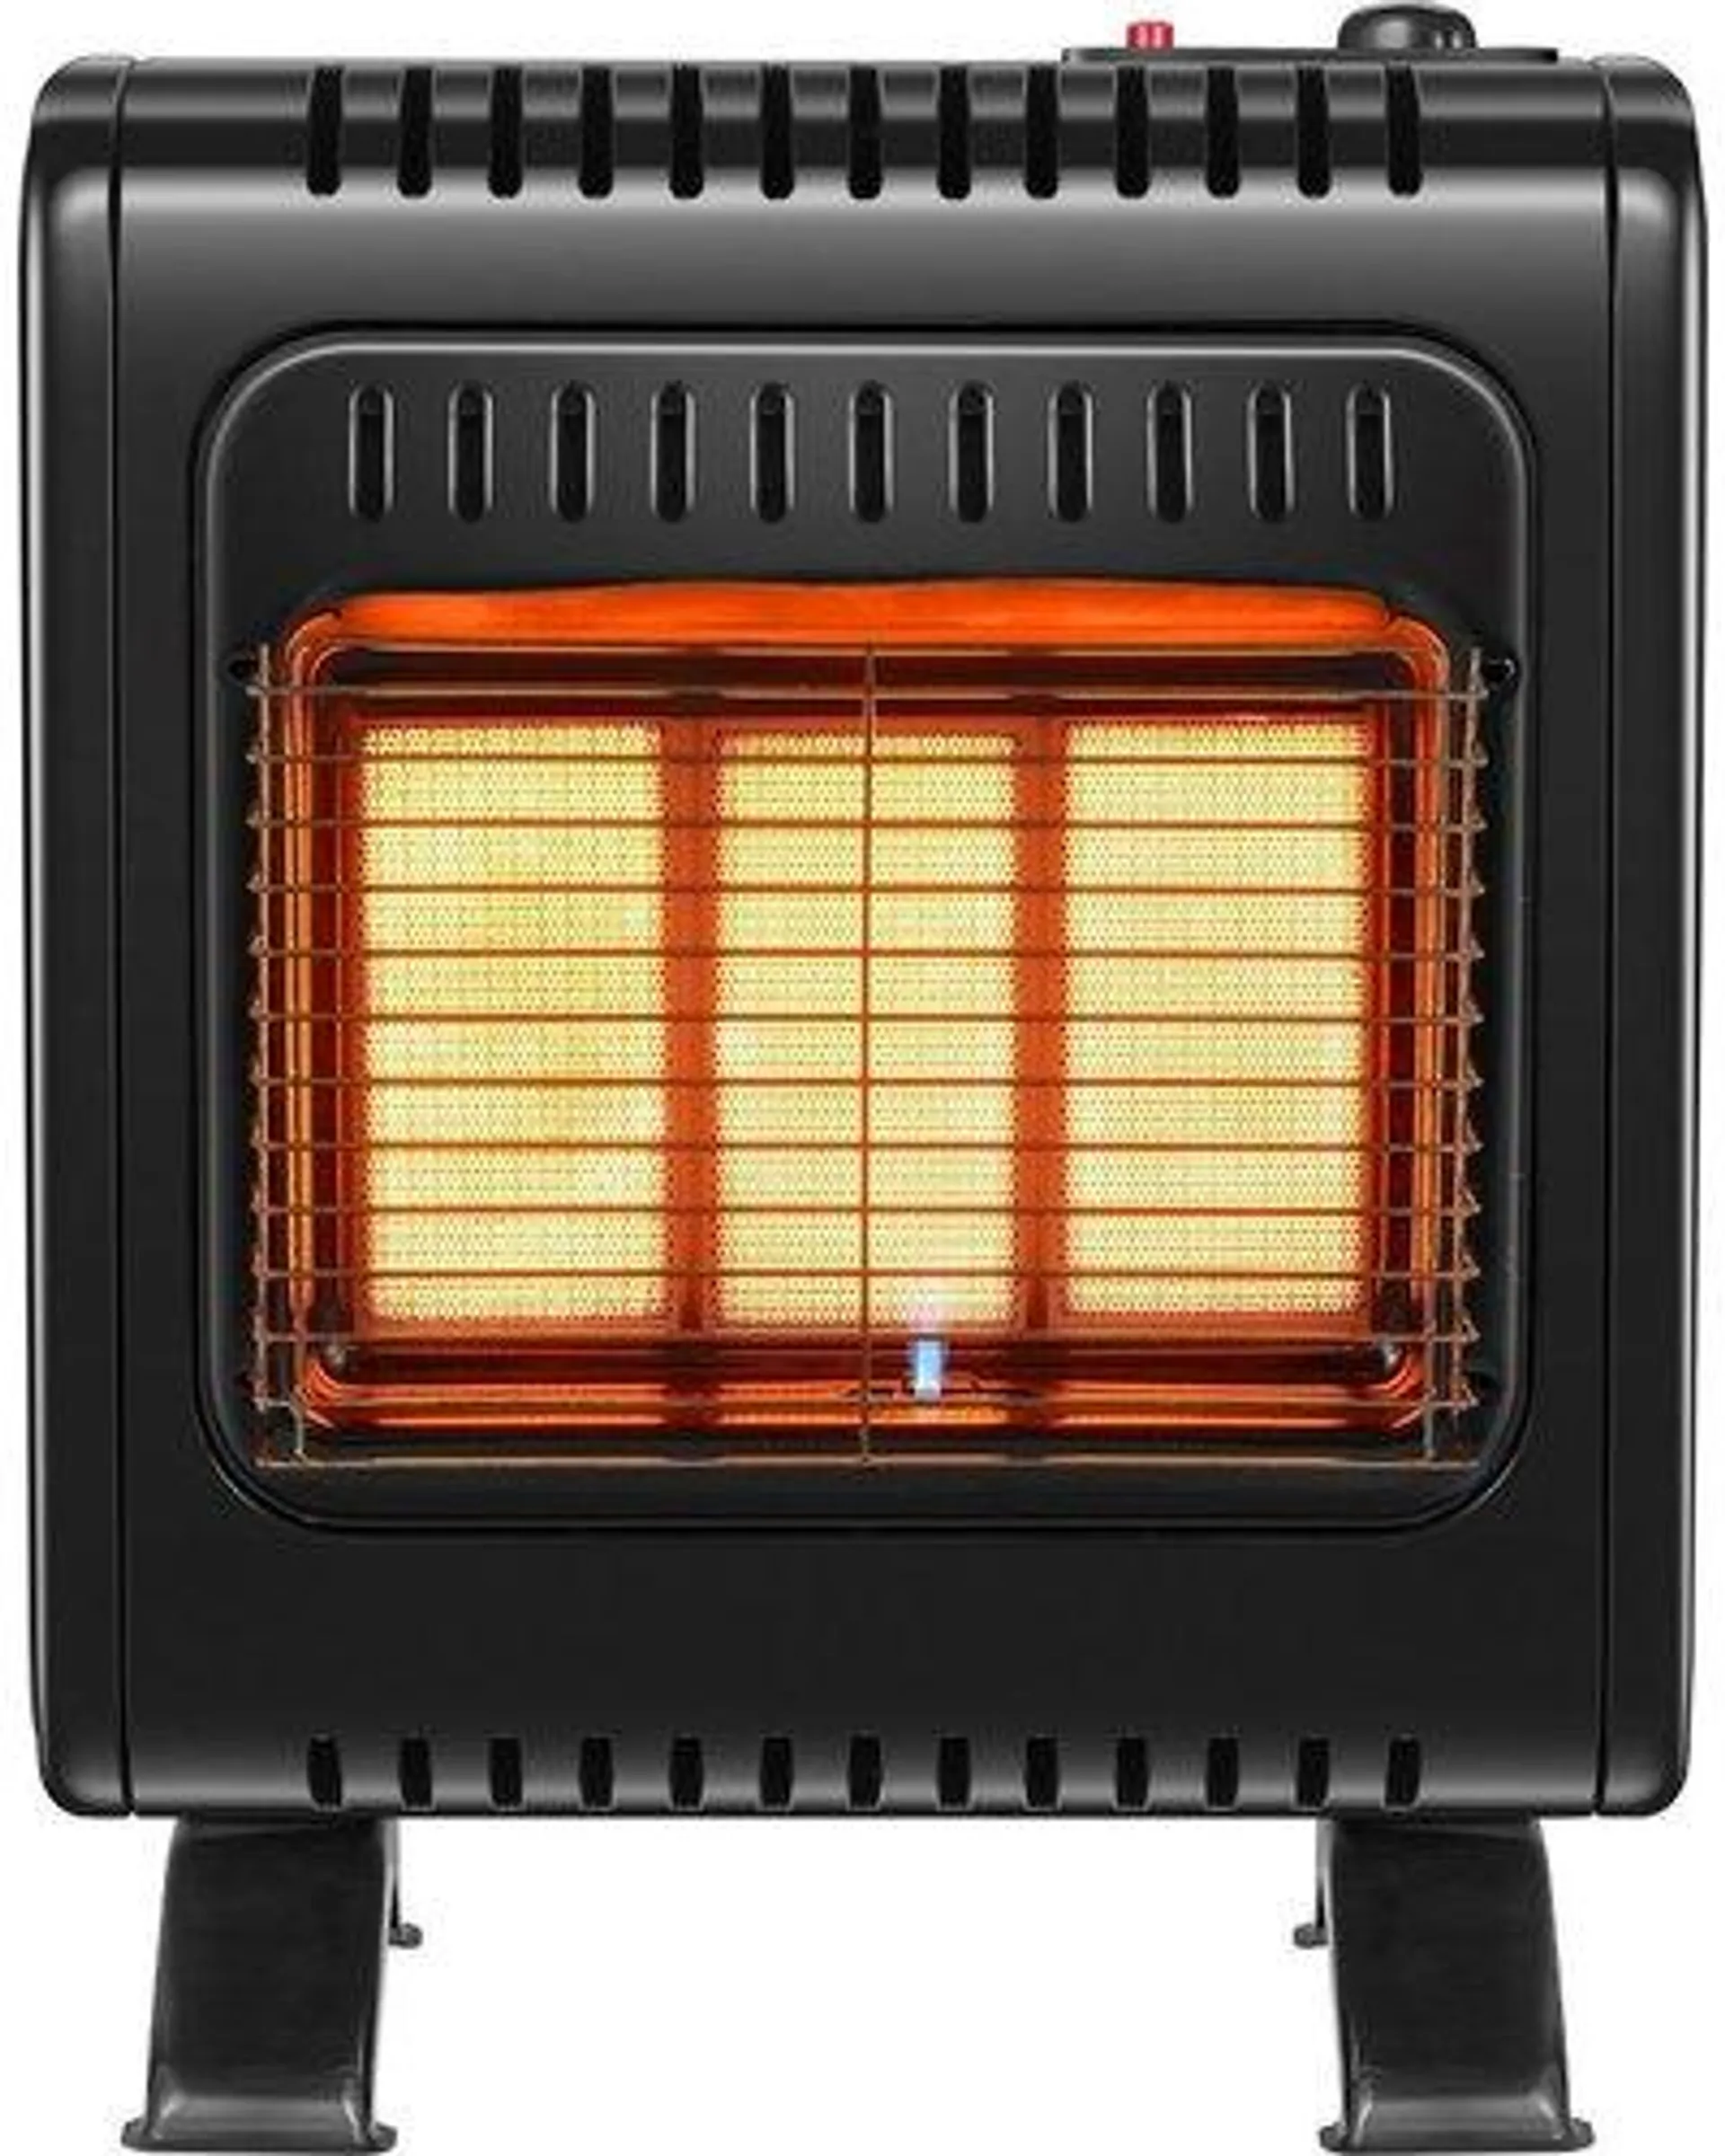 Alva 3-Panel Infrared Radiant Indoor Gas Heater (Small)